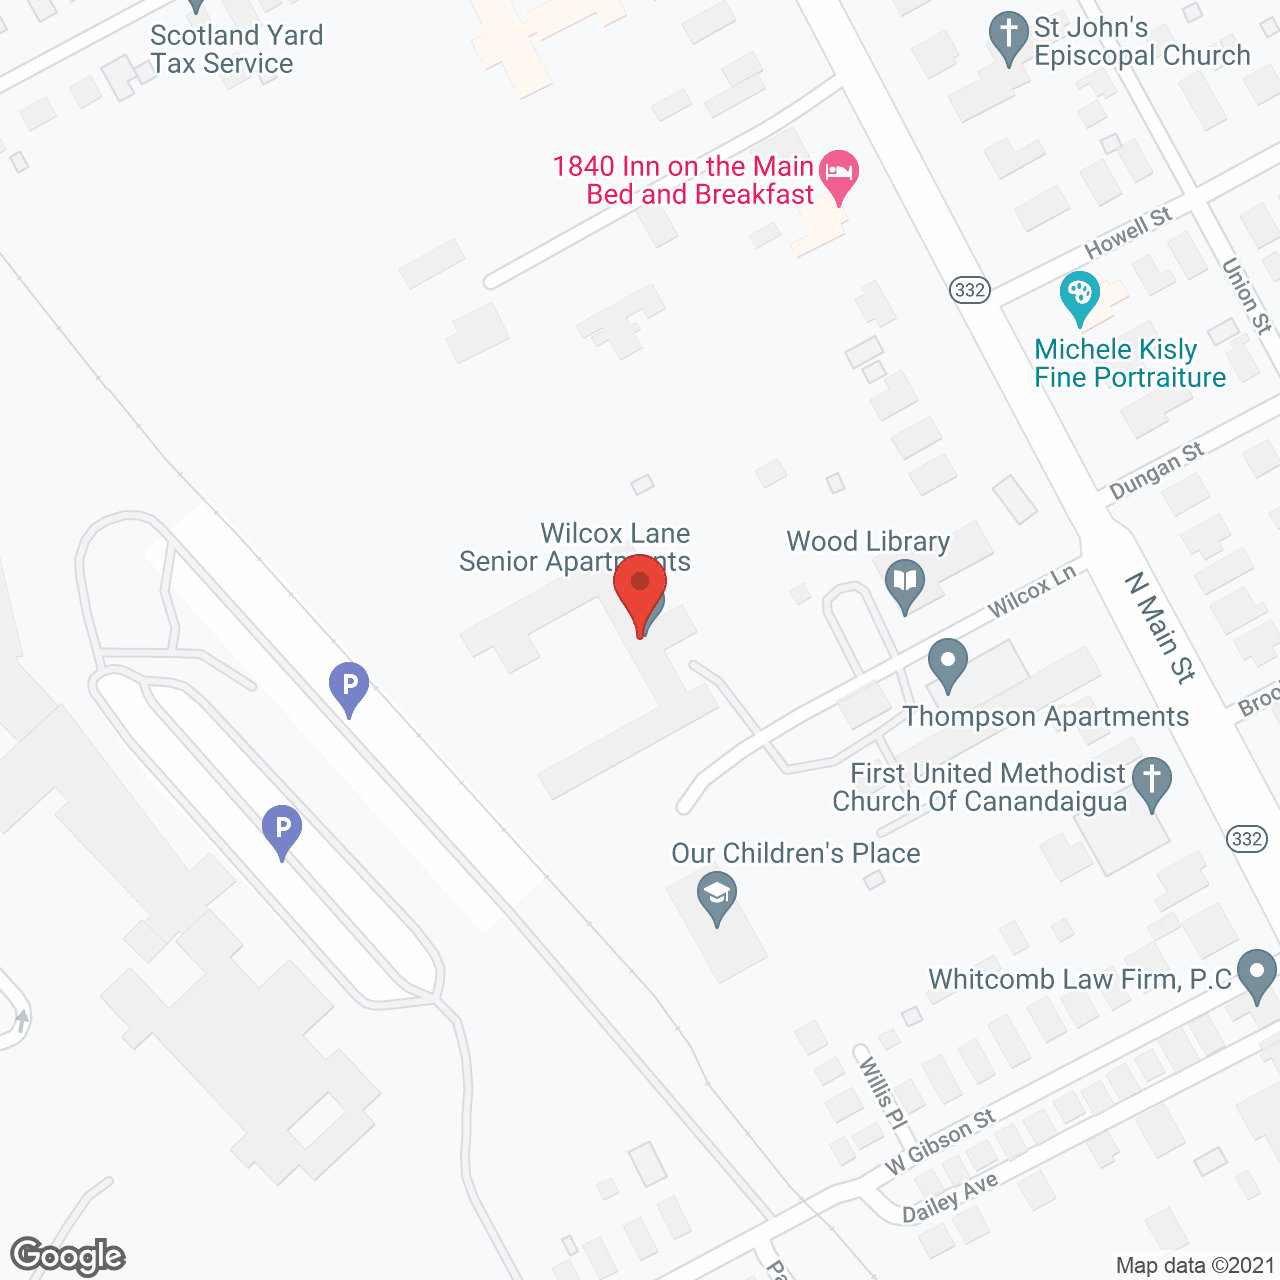 Wilcox Lane Apartments in google map